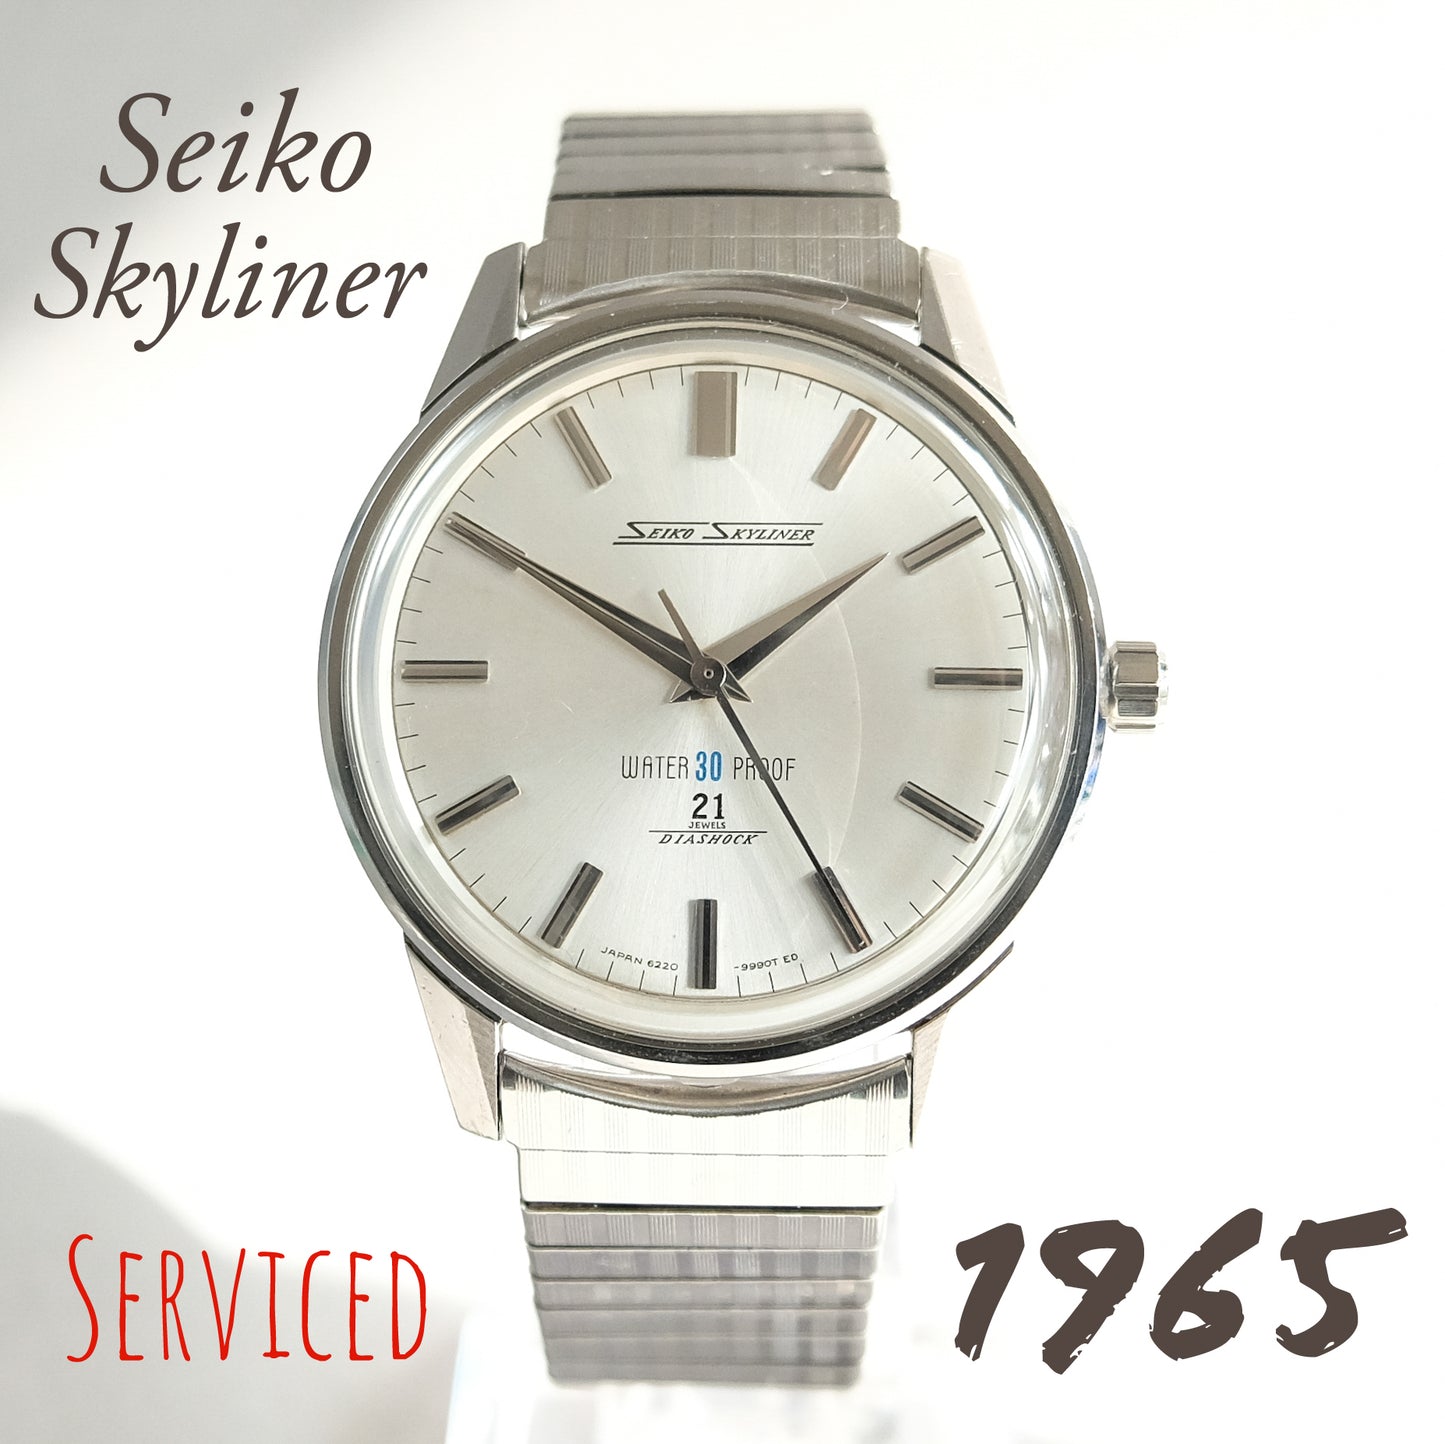 1965 Seiko Skyliner 14092